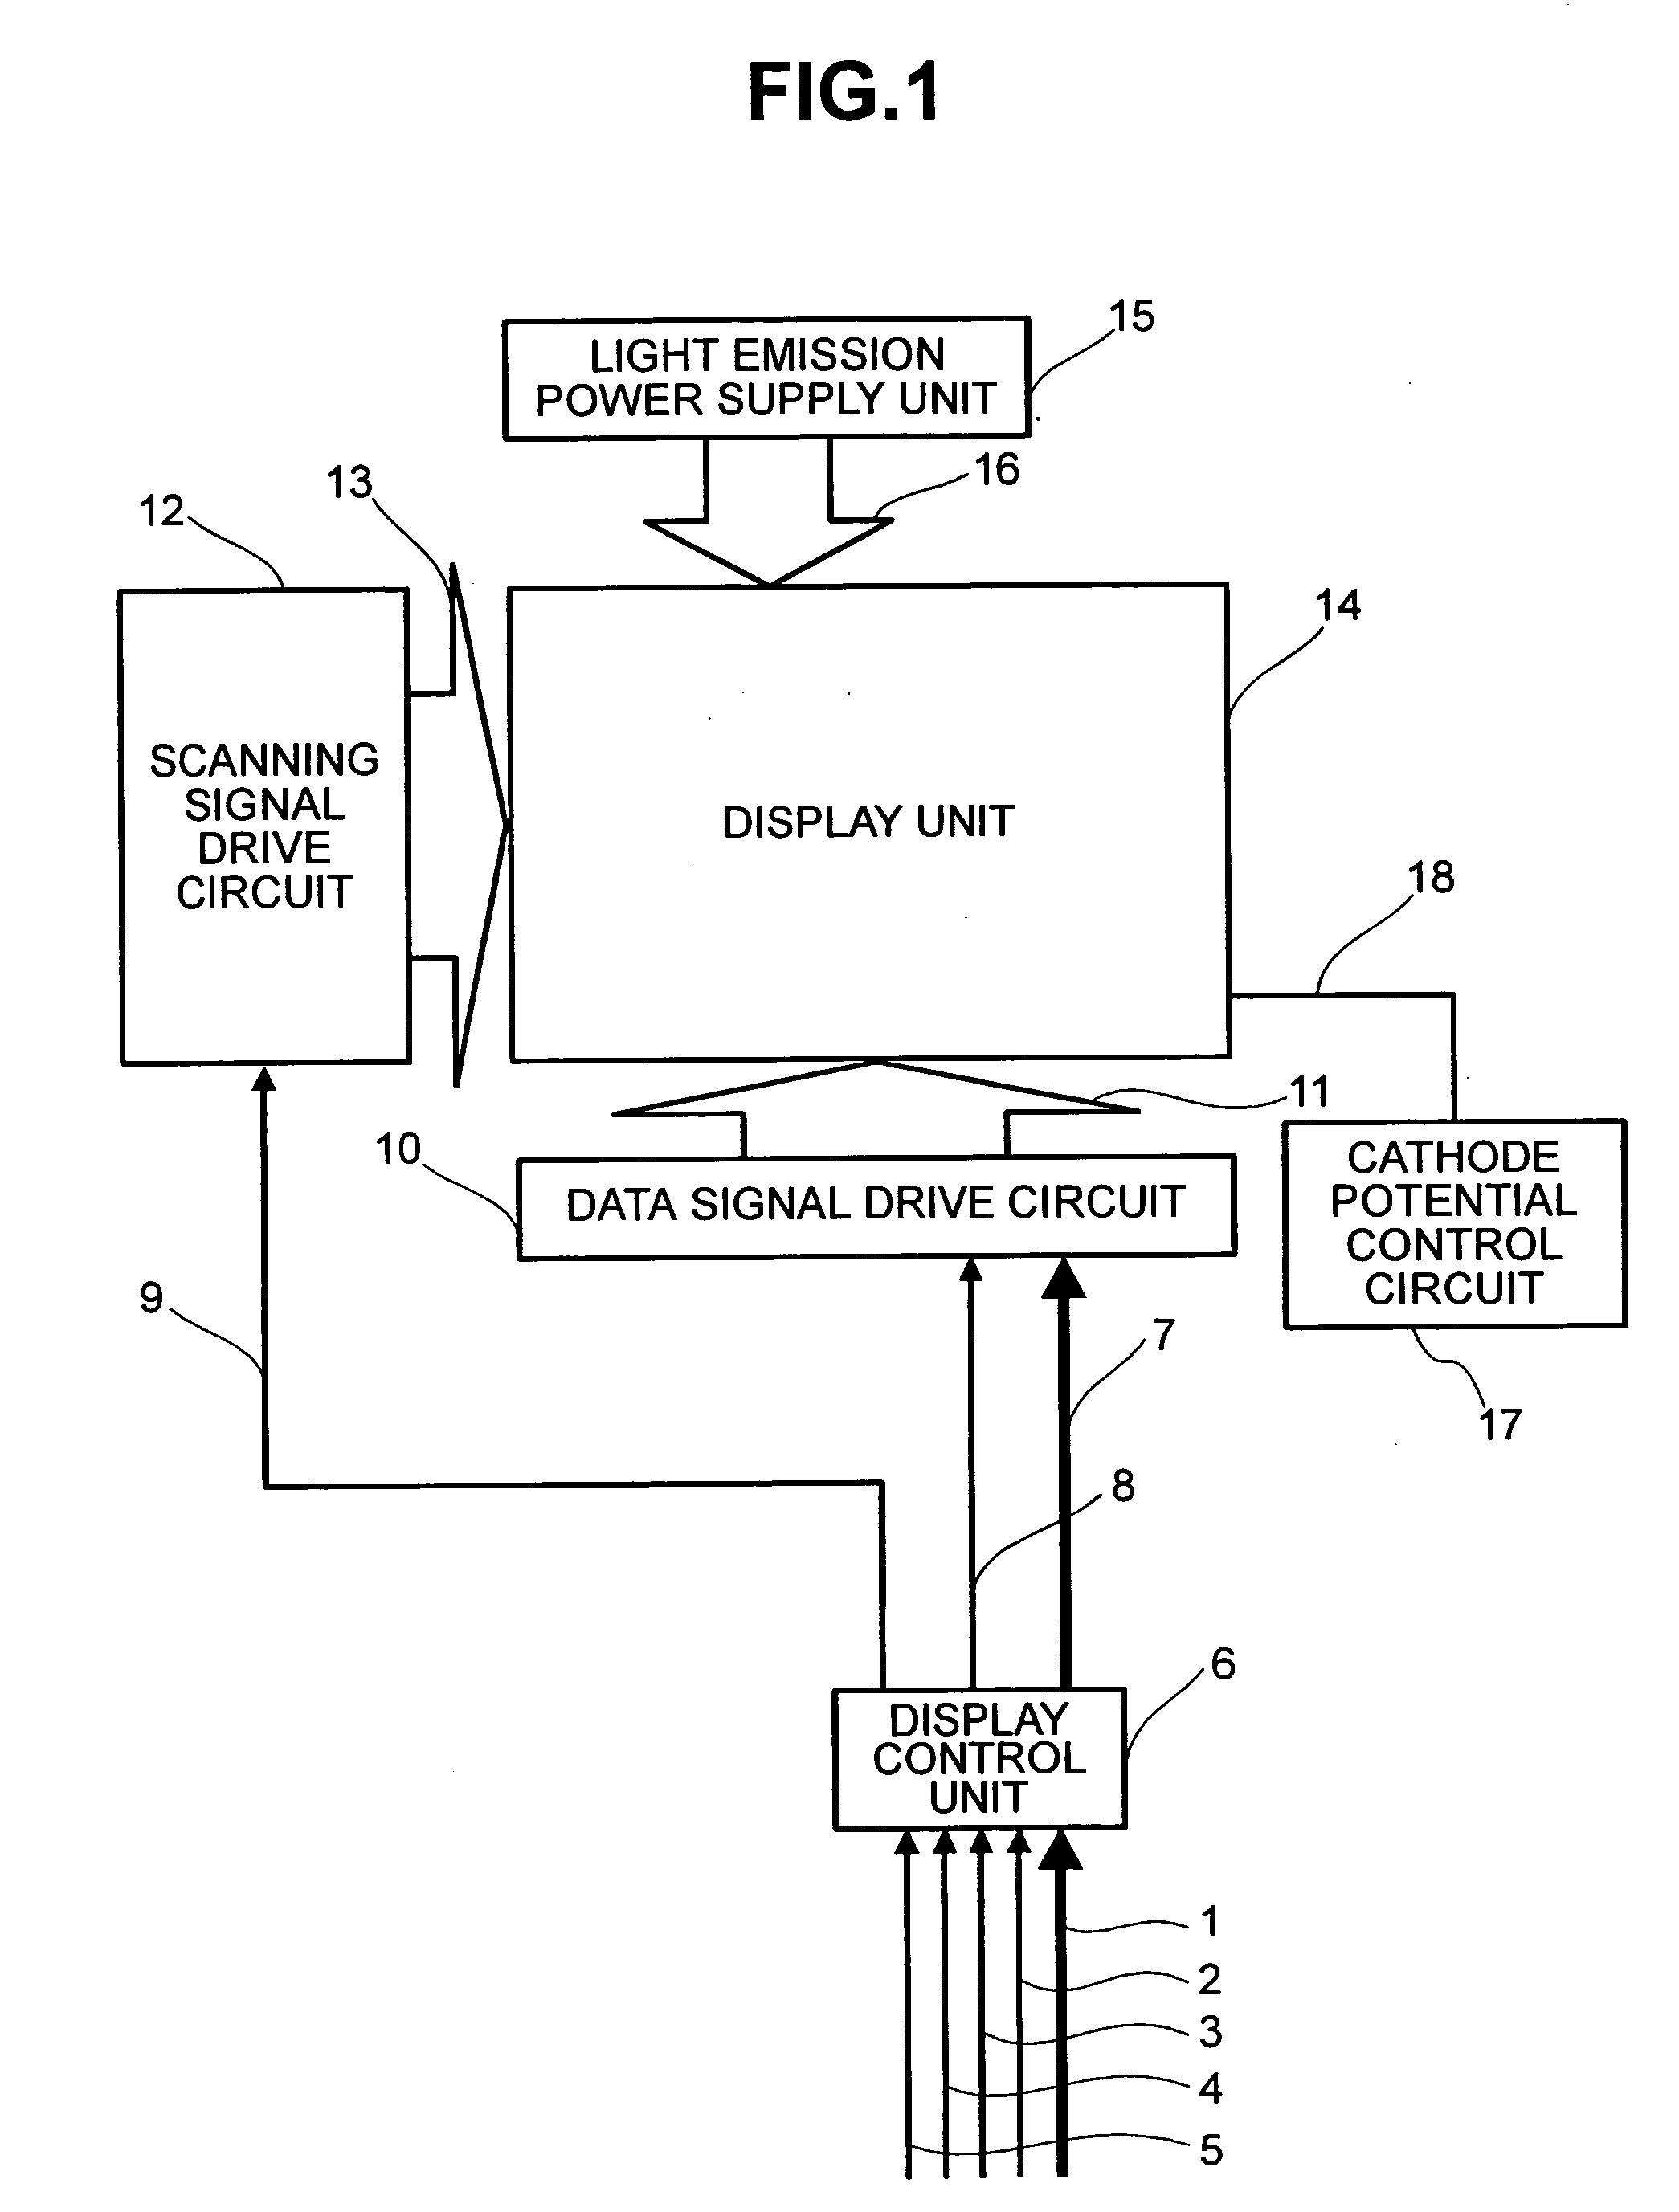 Display apparatus and display control method